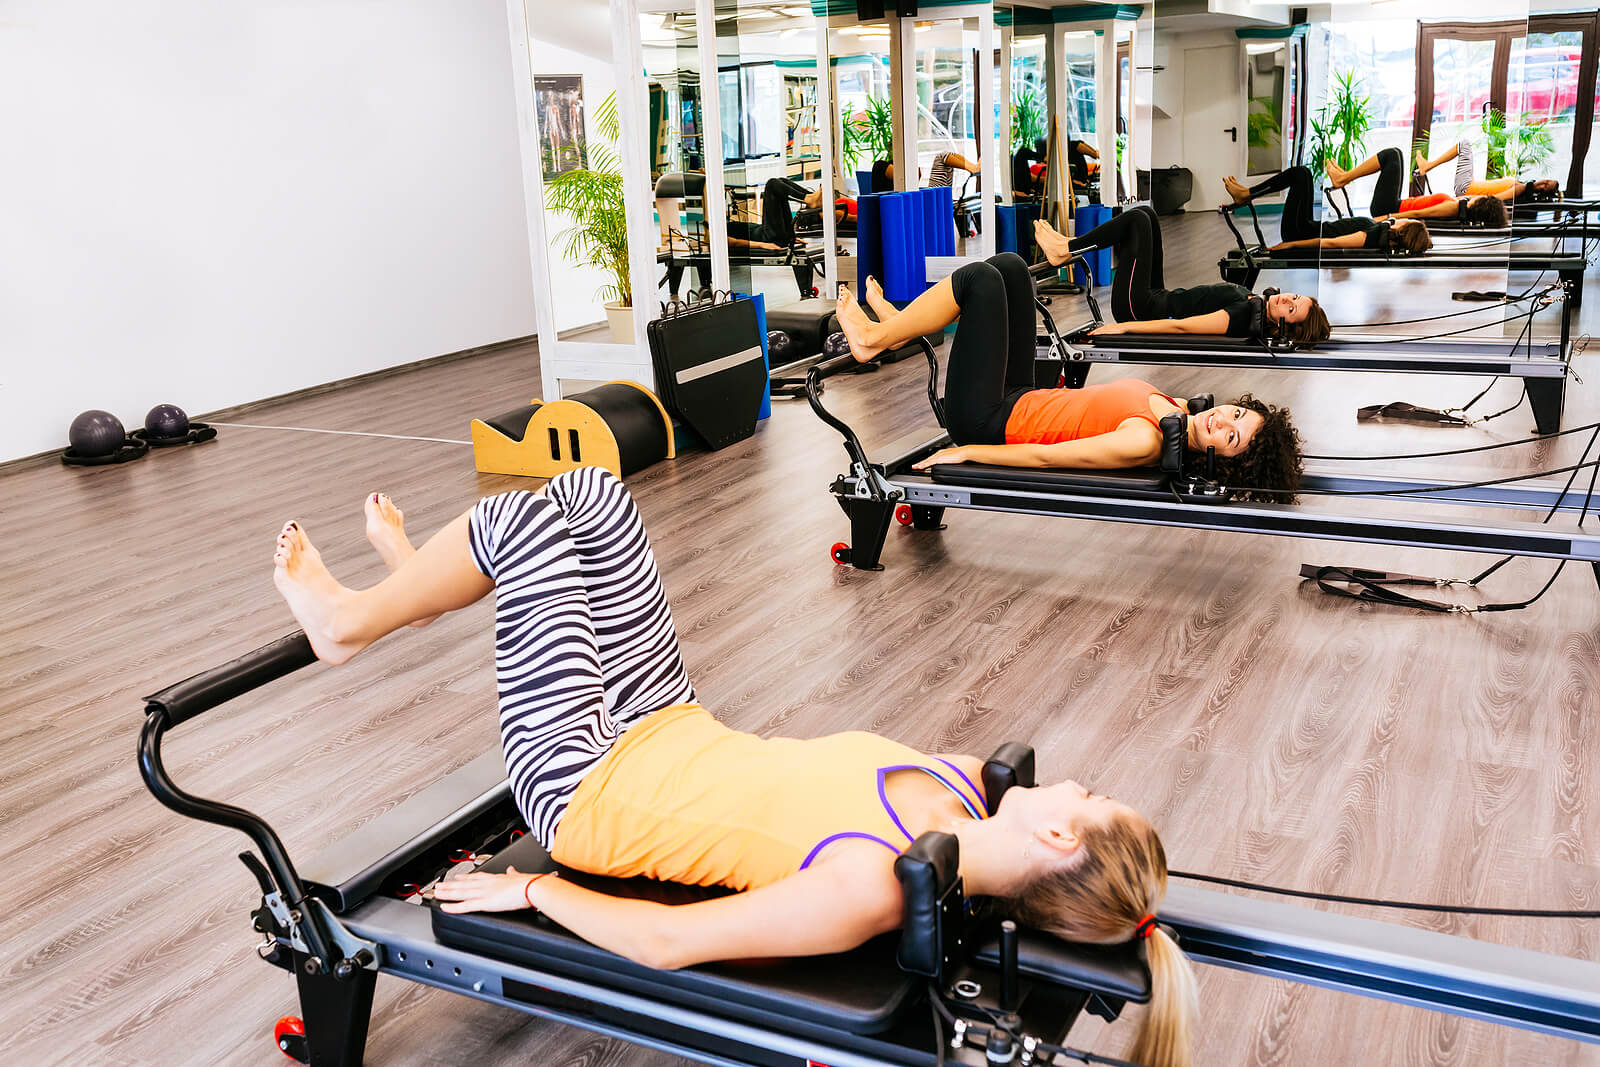 Women exercising on pilates reformer beds pose